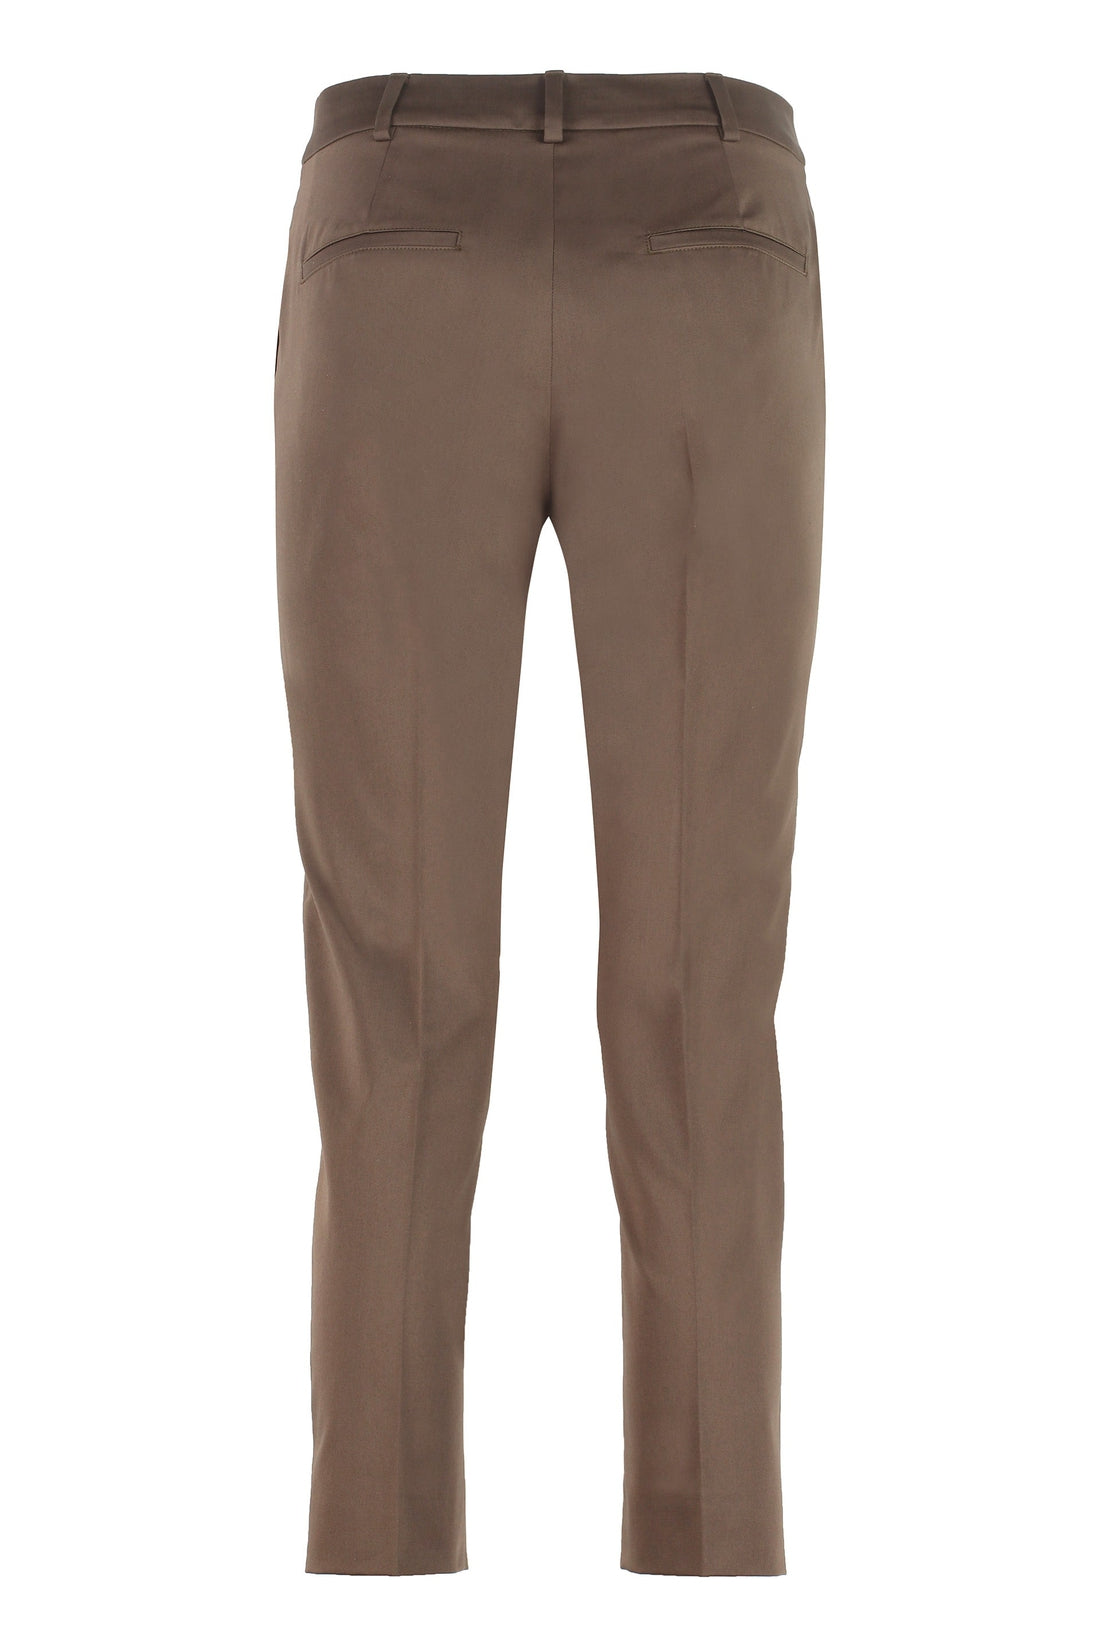 Max Mara-OUTLET-SALE-Calcut stretch cotton stovepipe trousers-ARCHIVIST